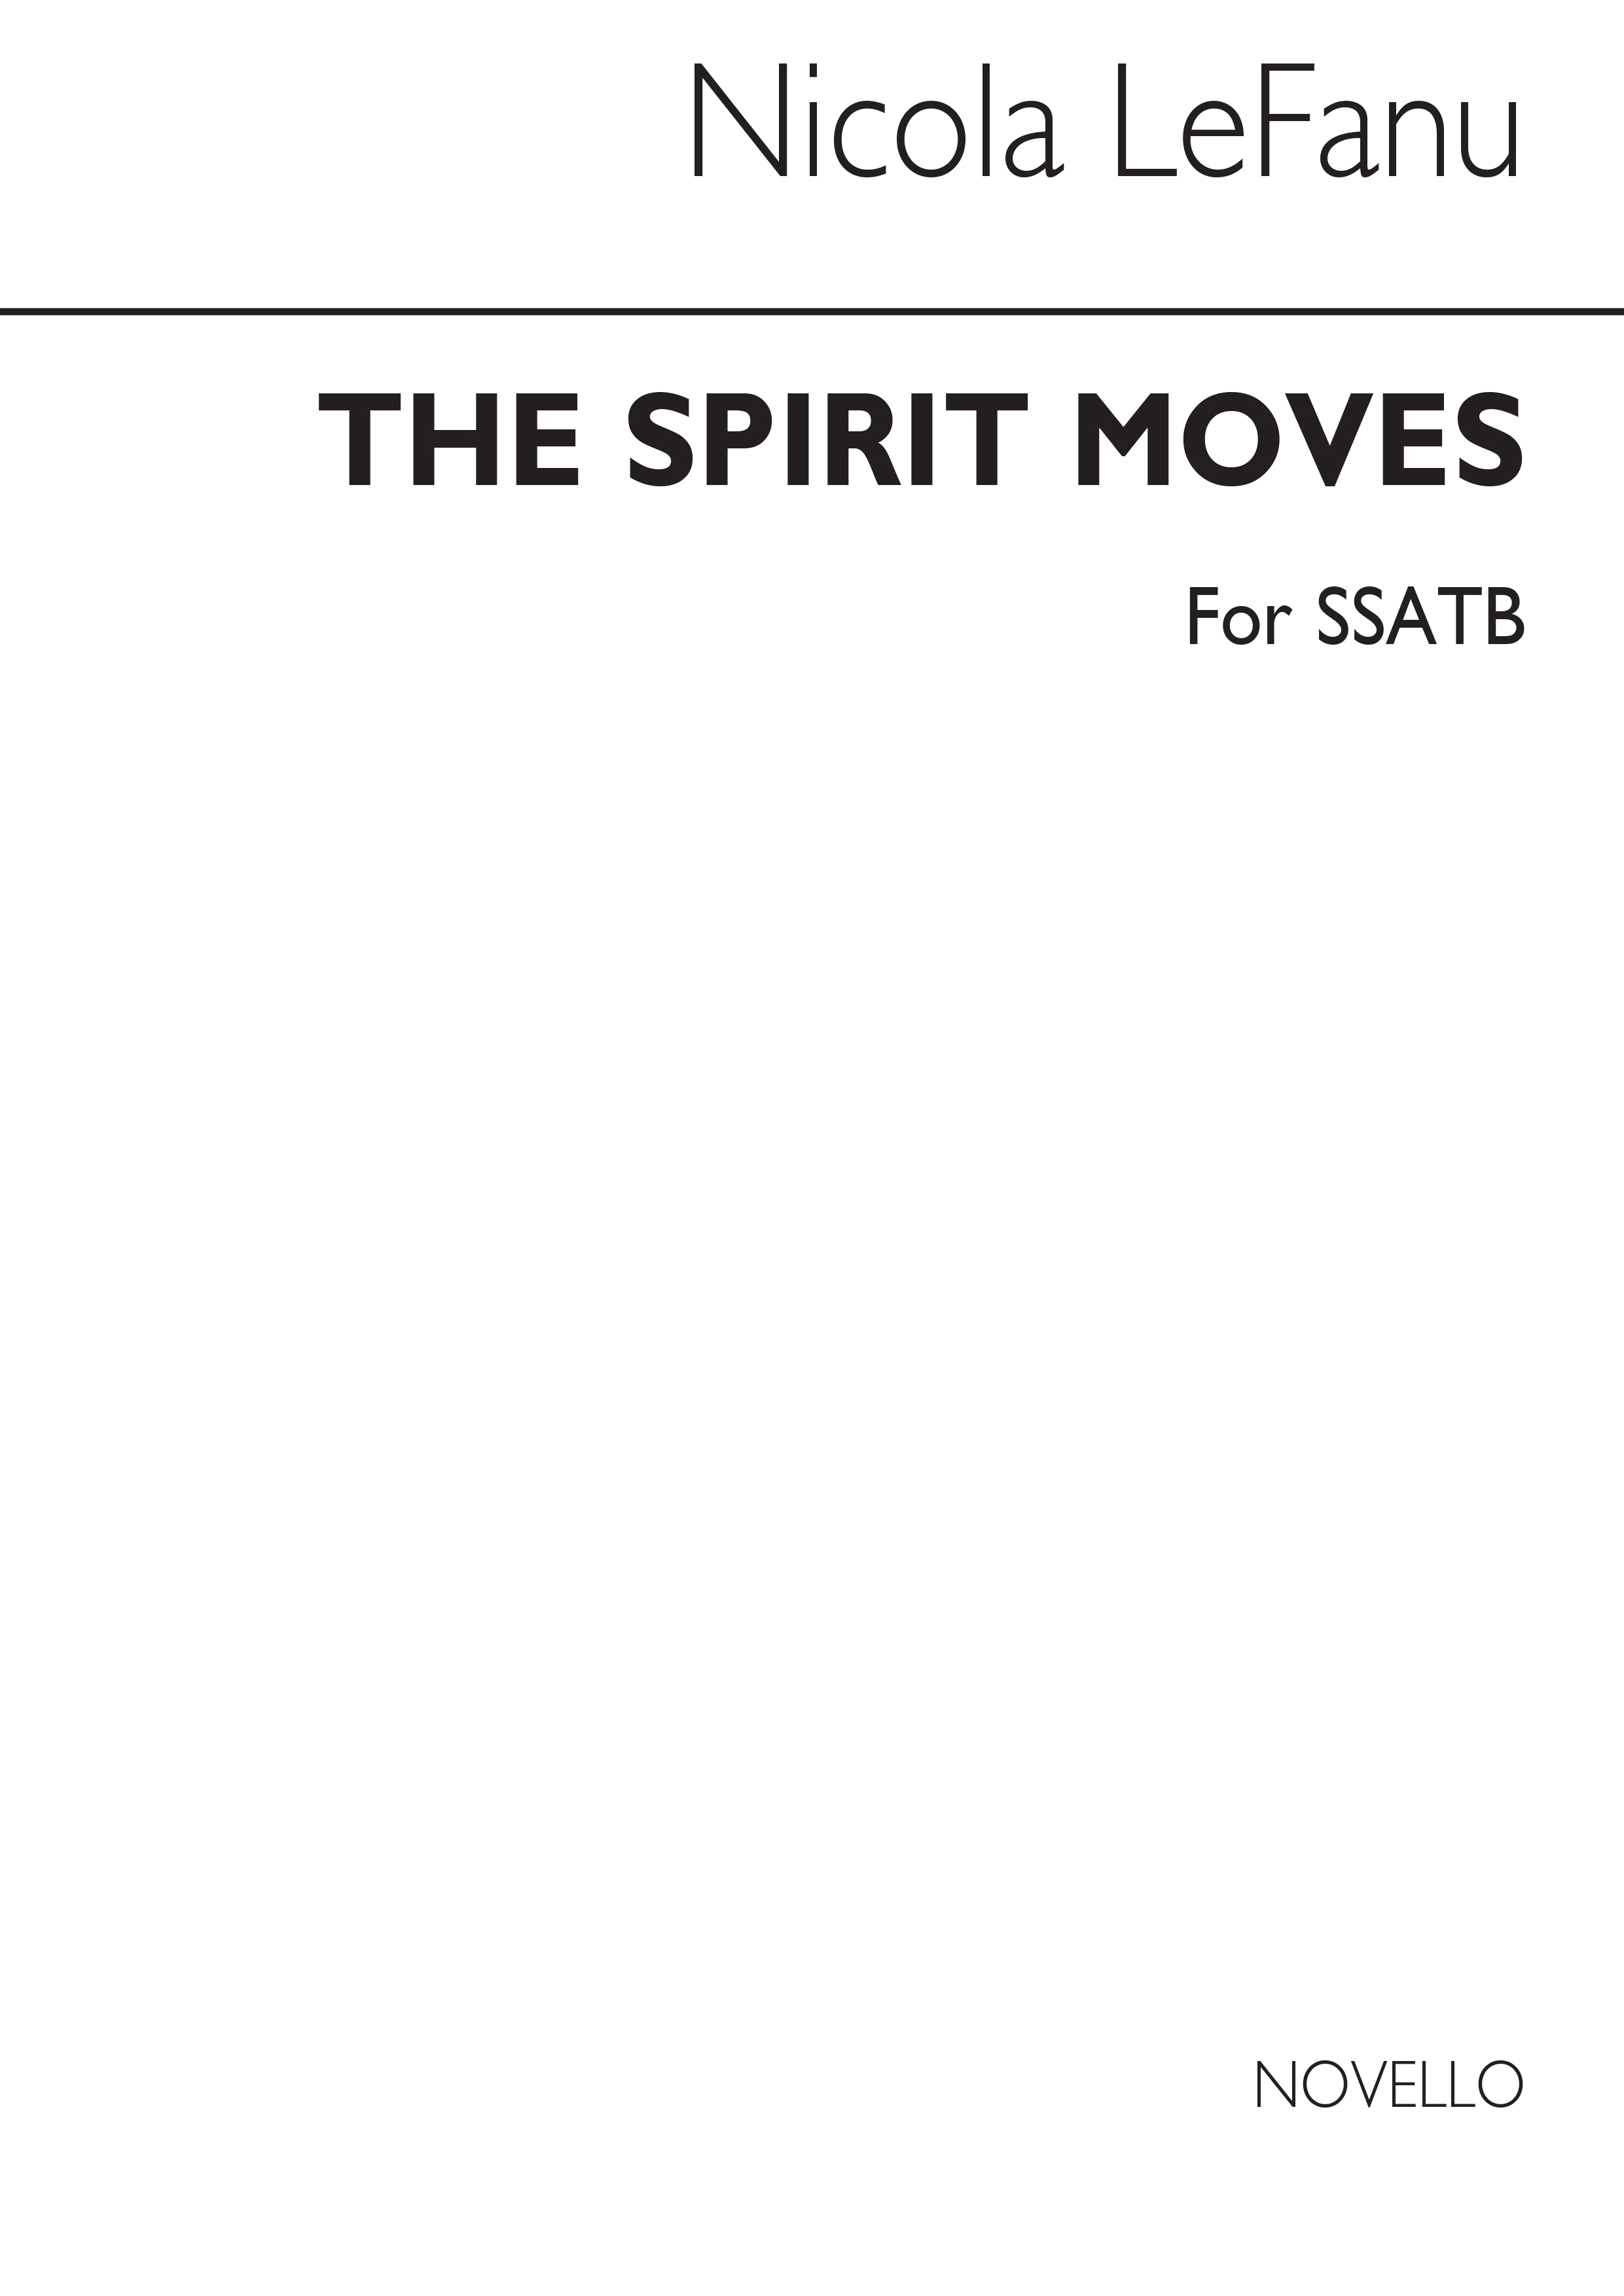 Lefanu: The Spirit Moves - A Short Anthem for SSATB